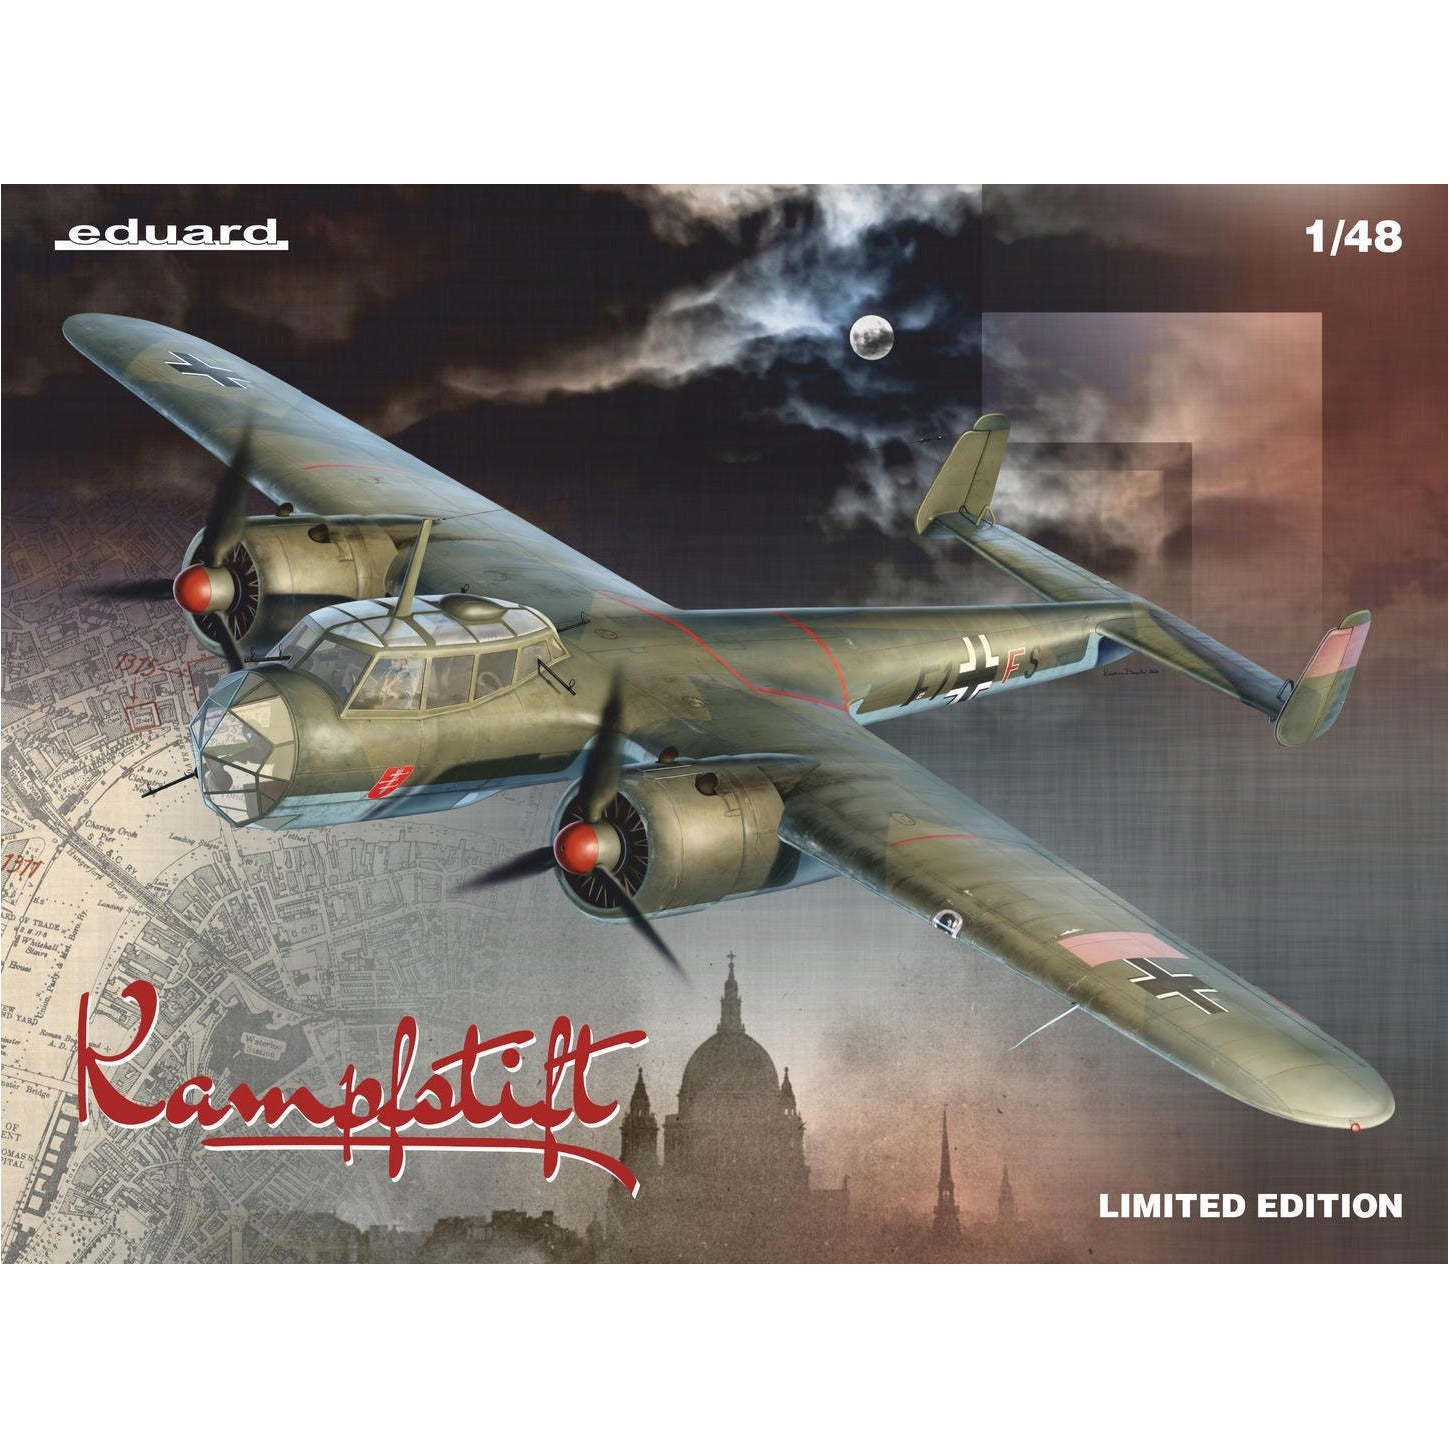 Dornier Do 17Z "Kampfstift" [Limited Edition] 1/48 #11147 by Eduard